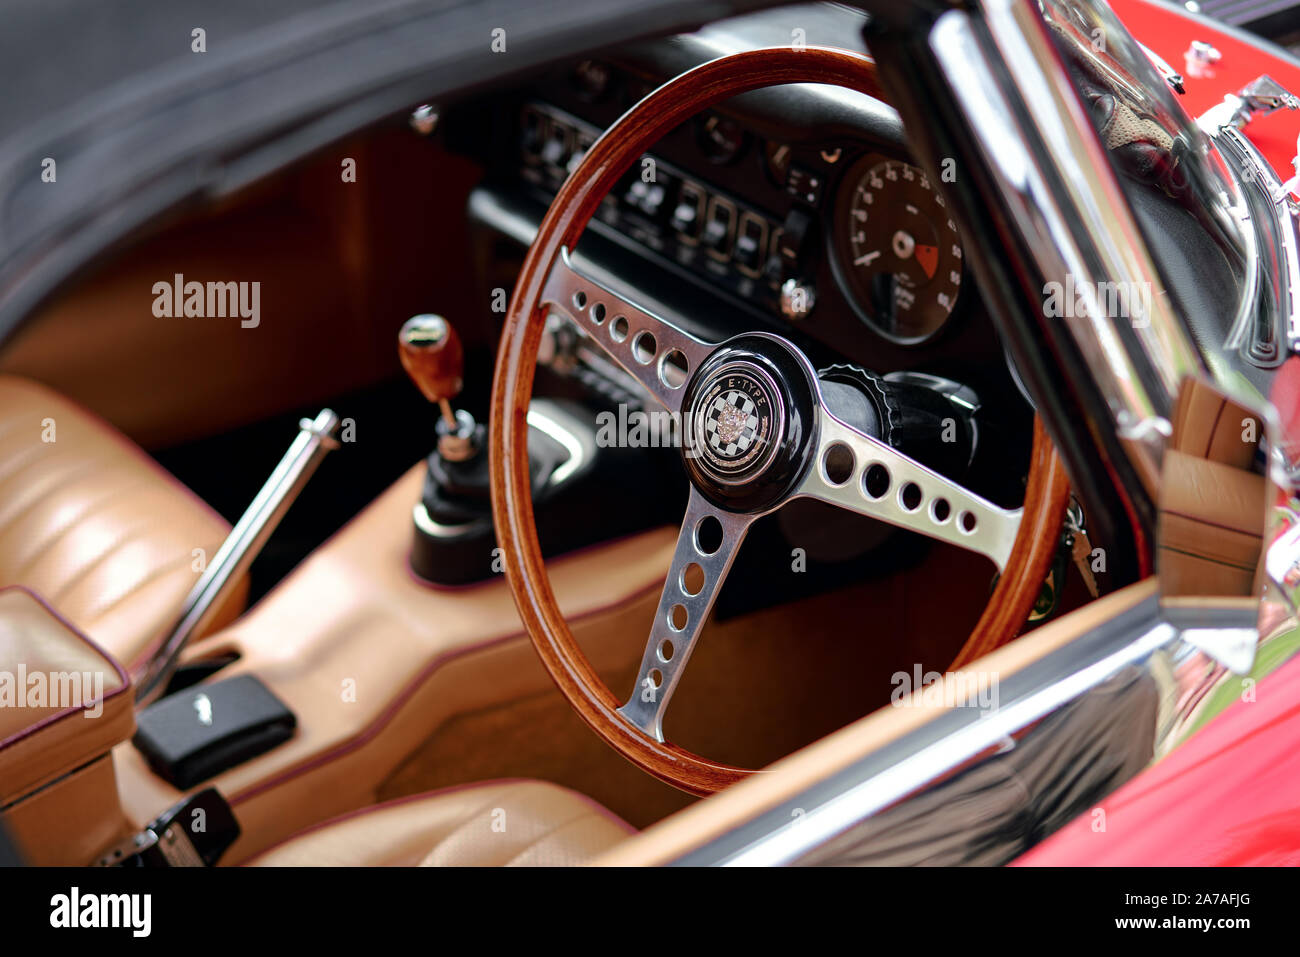 E-Type Jaguar Classic Car Leder Innenausstattung Armaturenbrett, Lenkrad  und Getriebestift Stockfotografie - Alamy